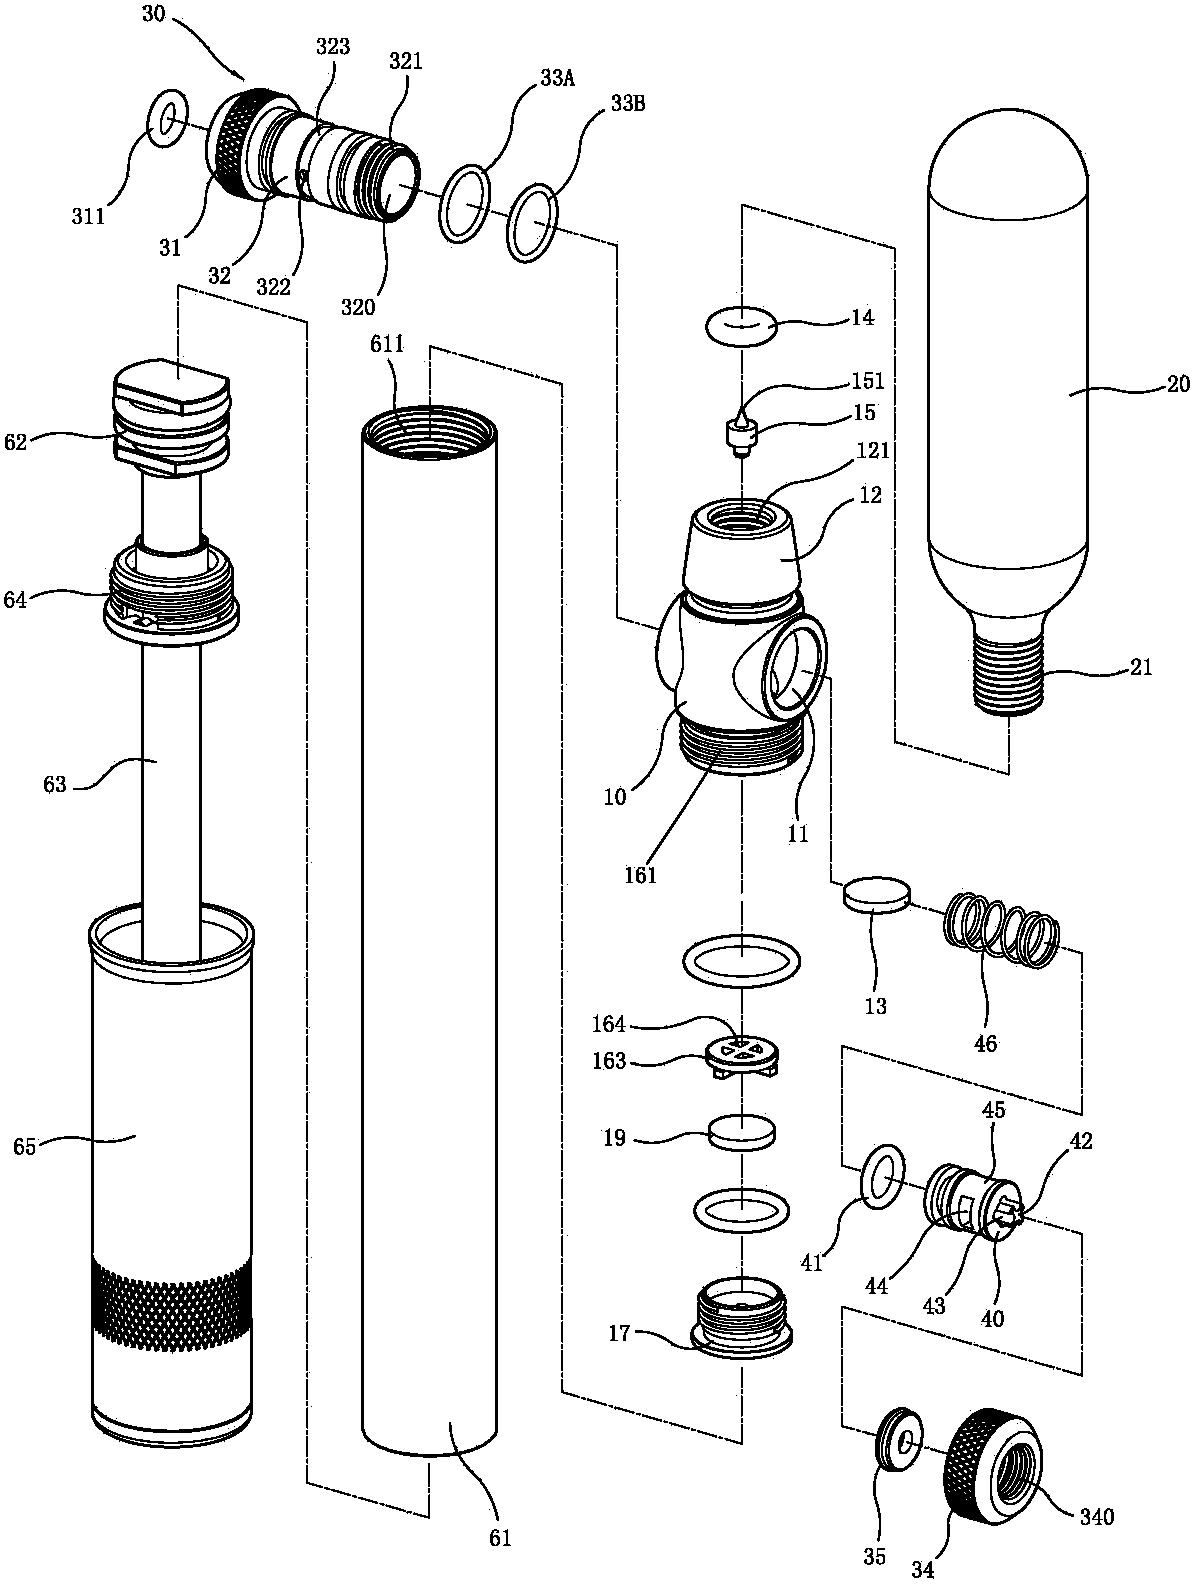 Schrader valve and Presta valve dual-purpose tuyere head